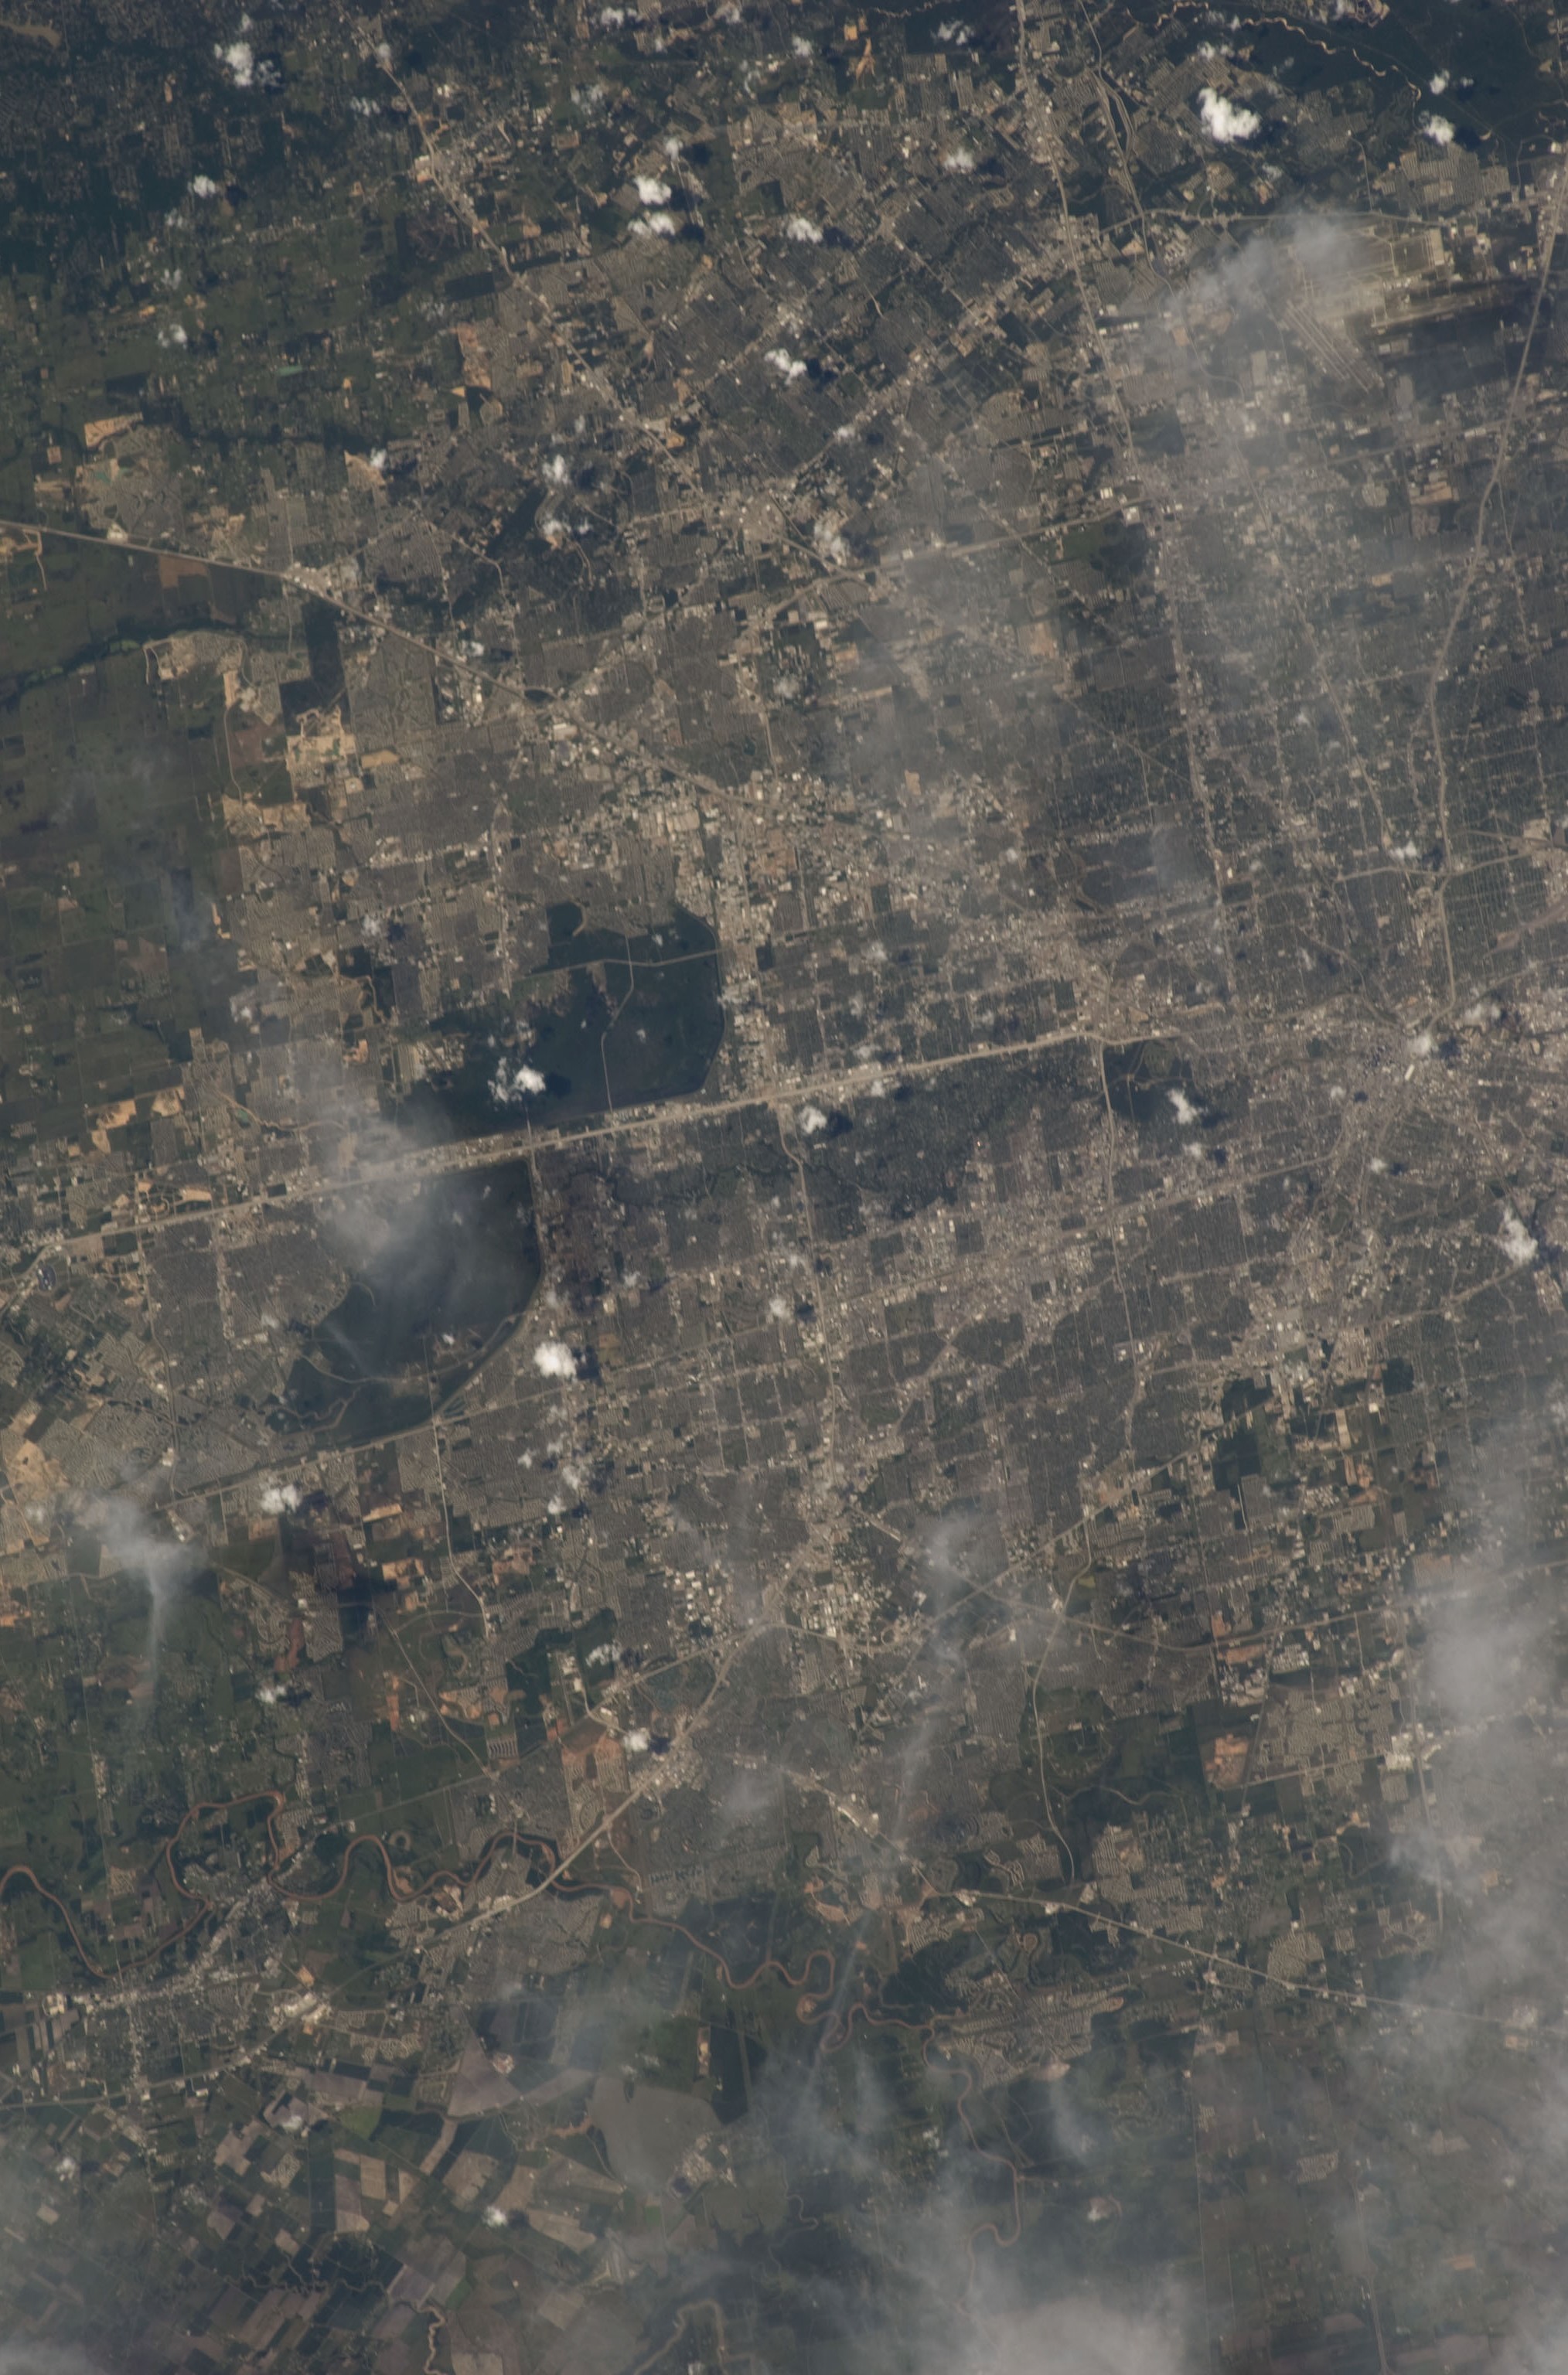 The western half of the Houston metropolitan area